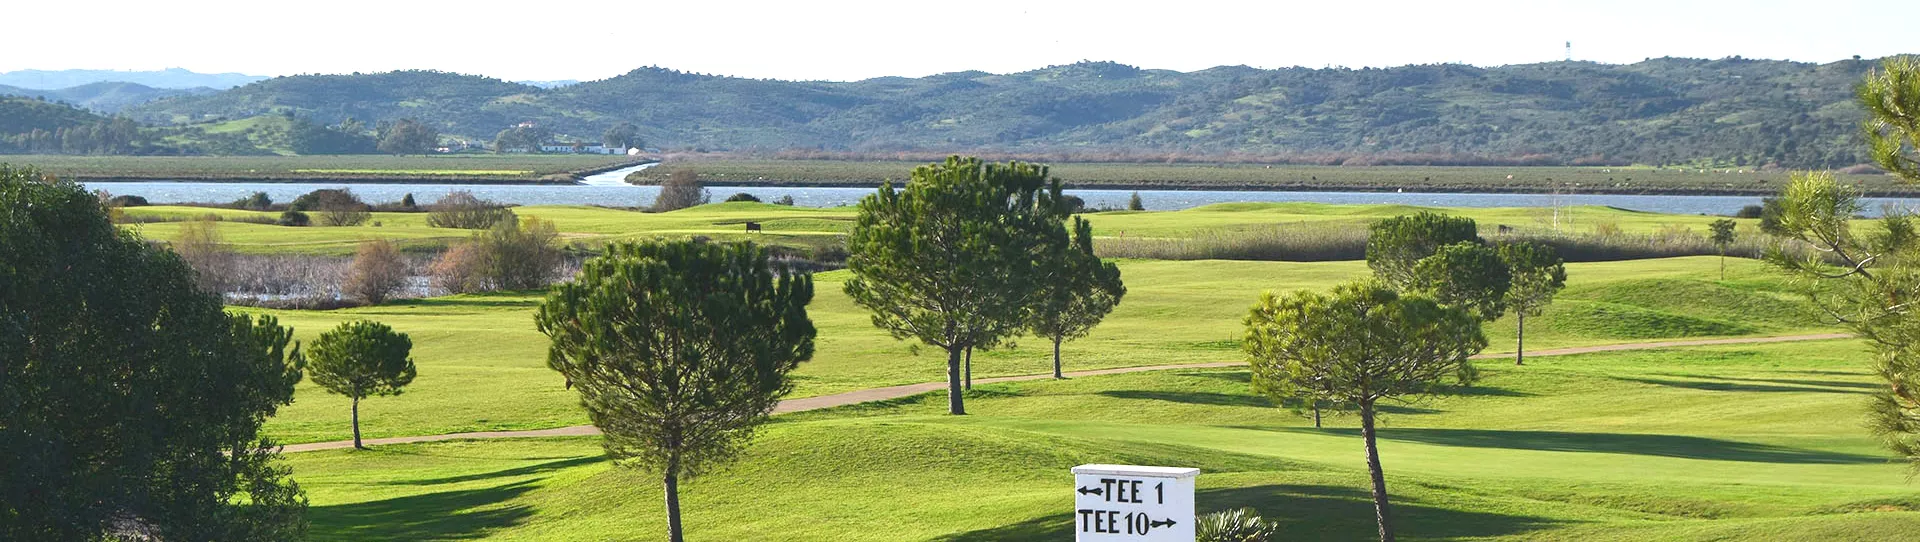 Portugal golf courses - Isla Canela Links (Spain) - Photo 2